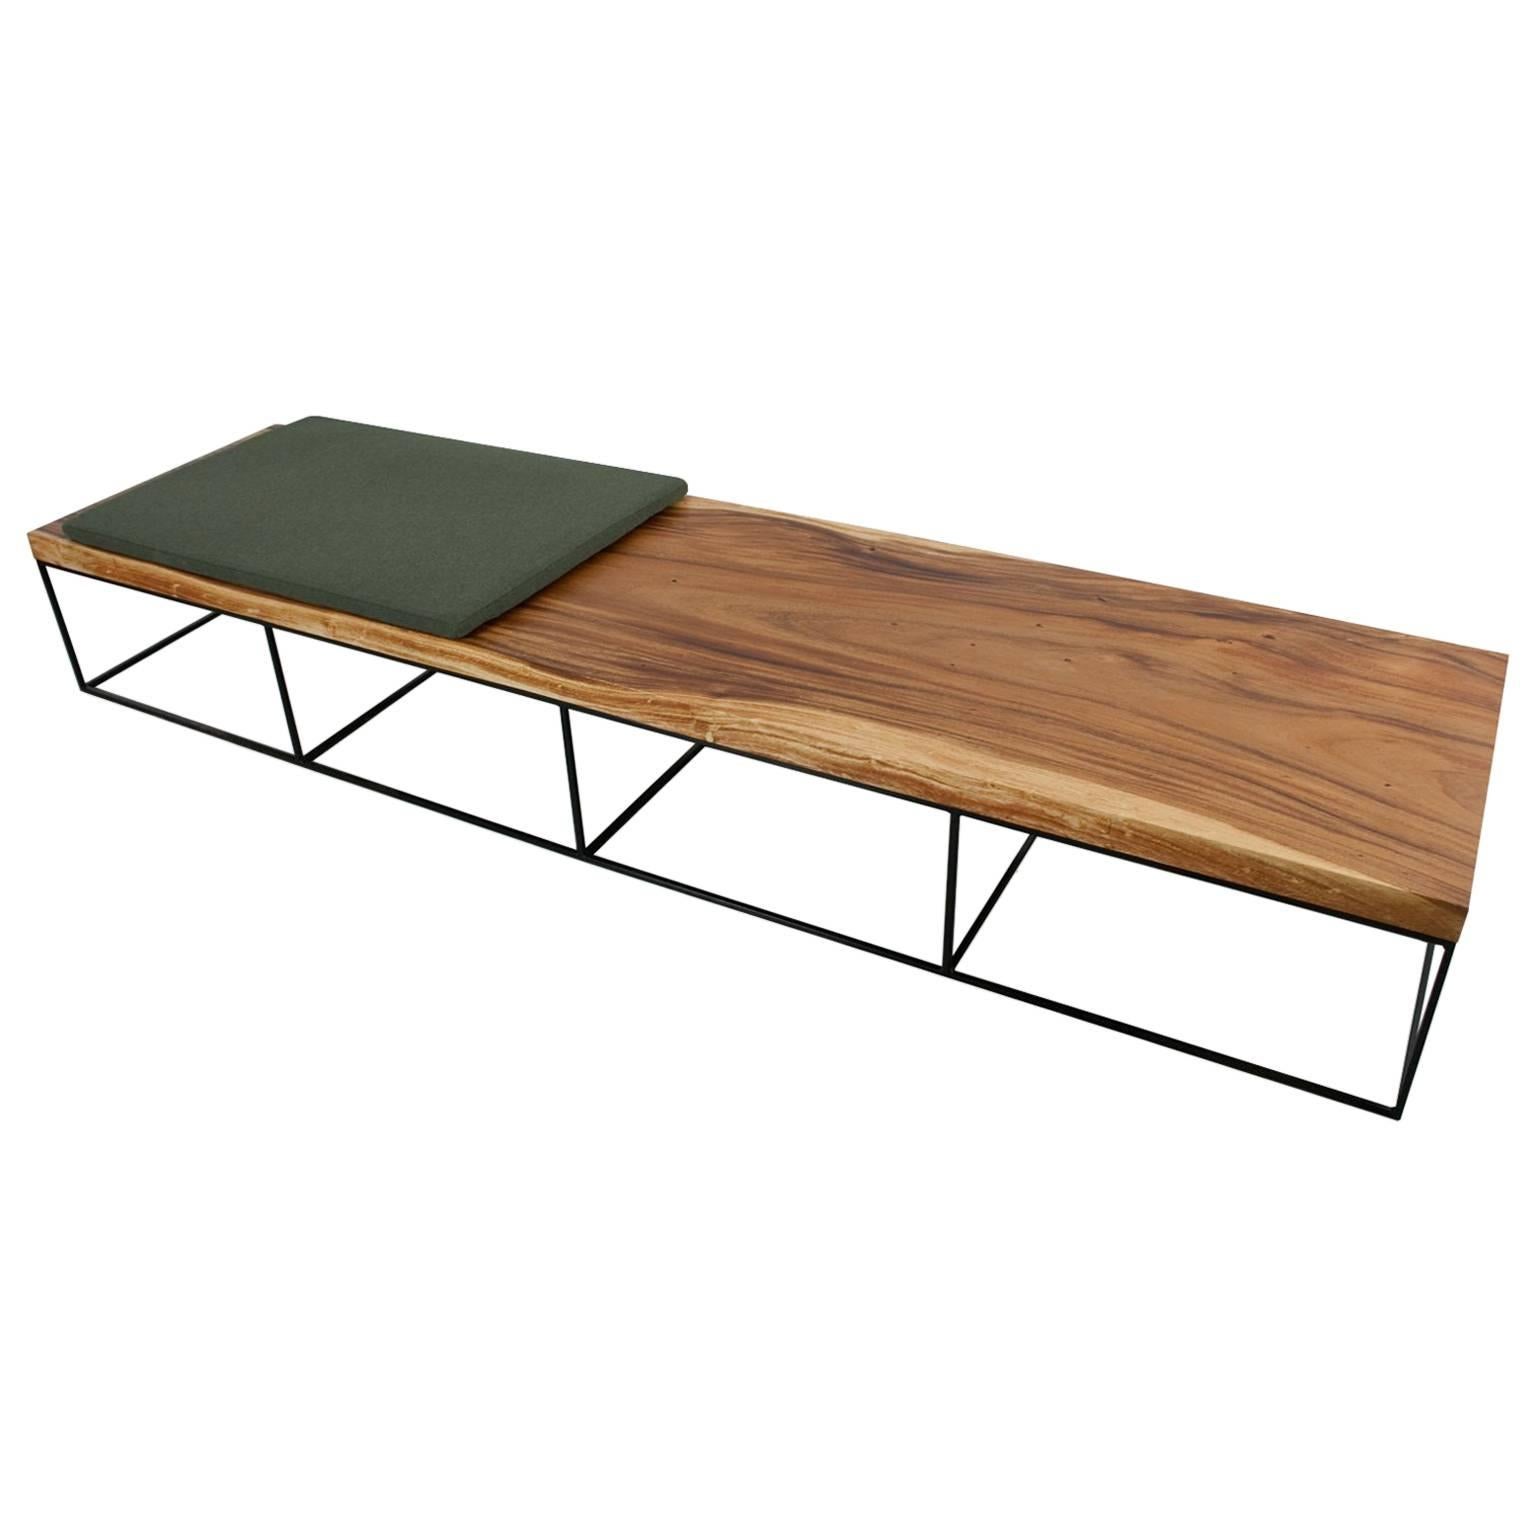 Long Wooden Suar Coffee Table or Bench, Organic Contemporary Modern Design